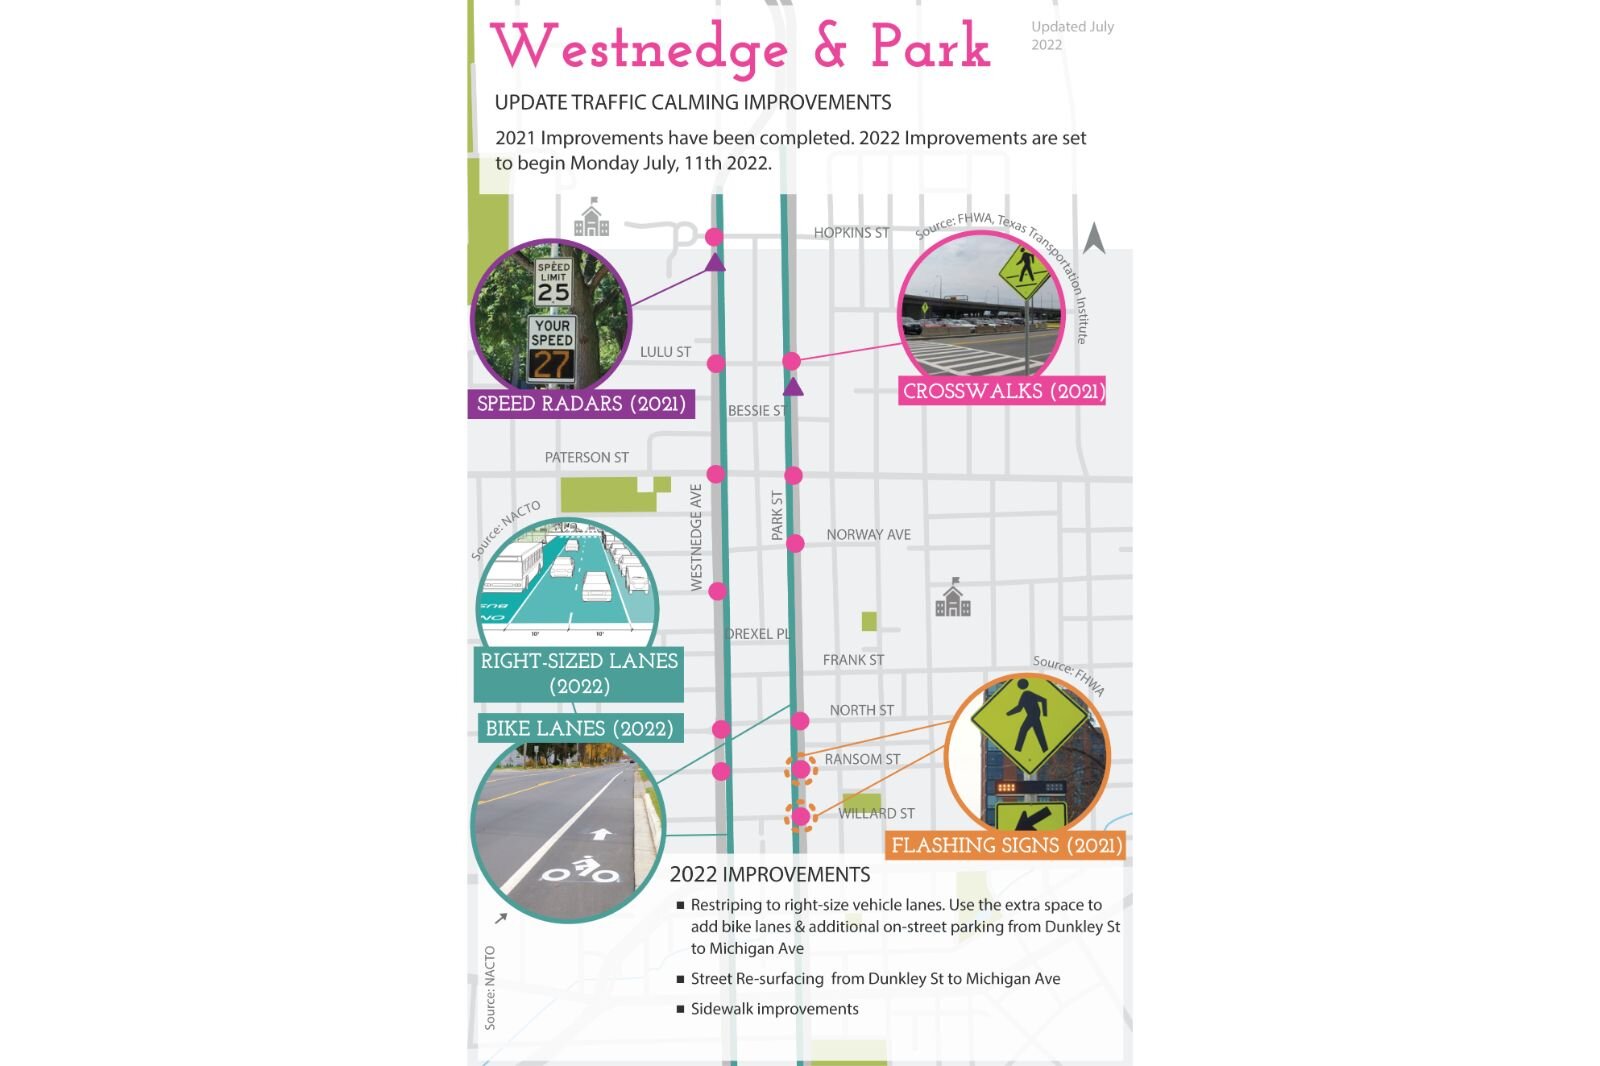  Westnedge and Park 2022 Improvements in the Northside Neighborhood, from Imagine Kalamazoo. 